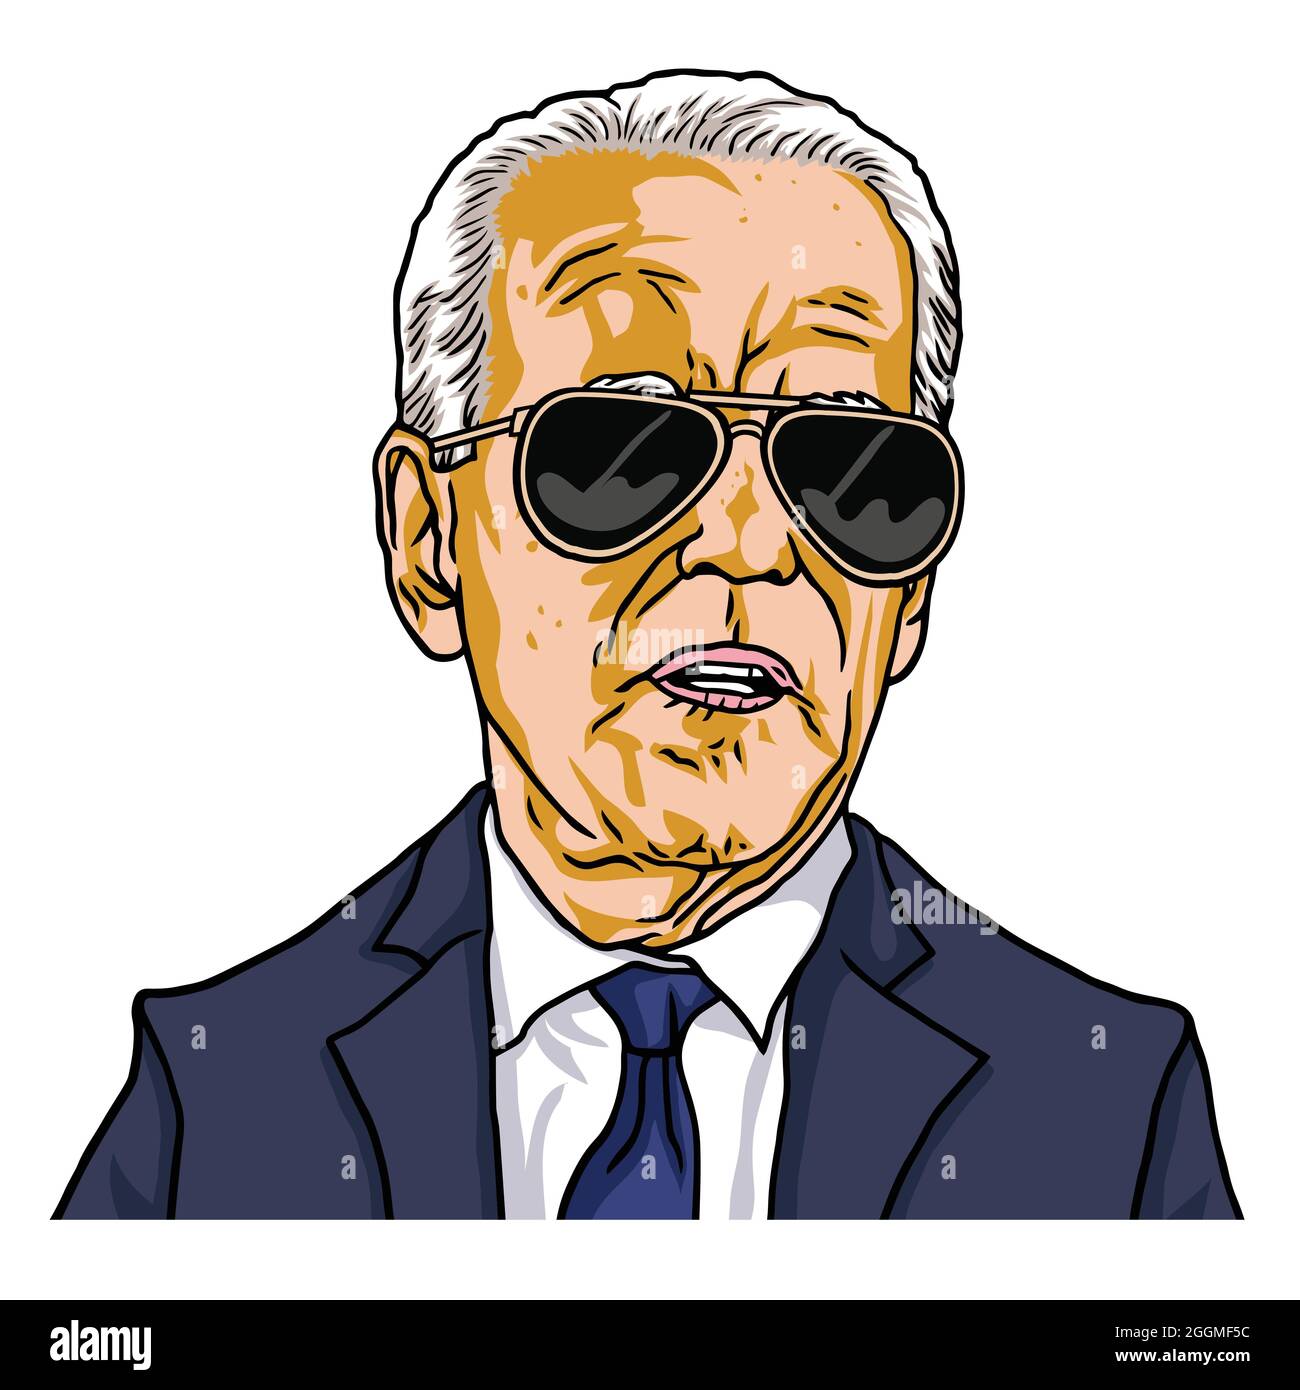 Joe Biden der Präsident der Vereinigten Staaten trägt schwarze Sonnenbrille US Cartoon Karikatur Vektor Illustration. Washington, Den 2. September 2021 Stock Vektor